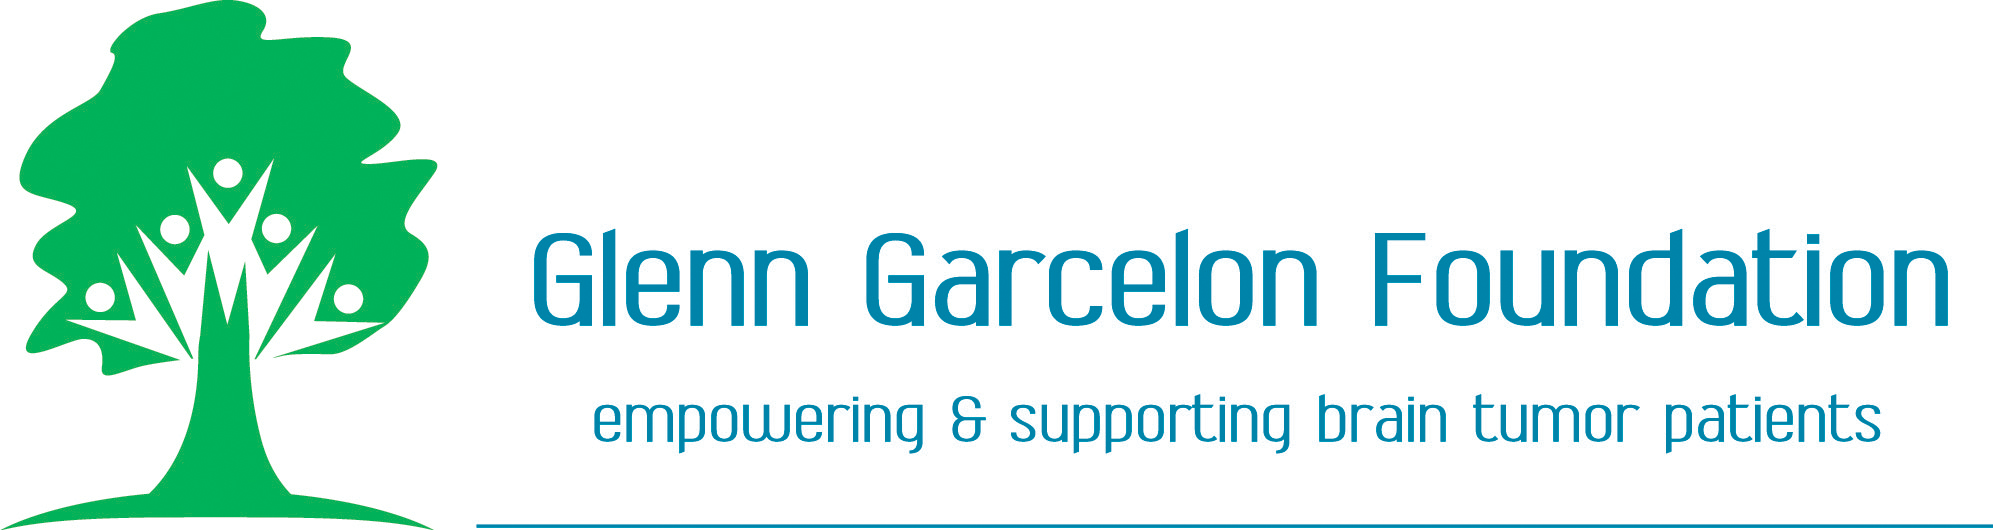 Glenn Garcelon Foundation logo